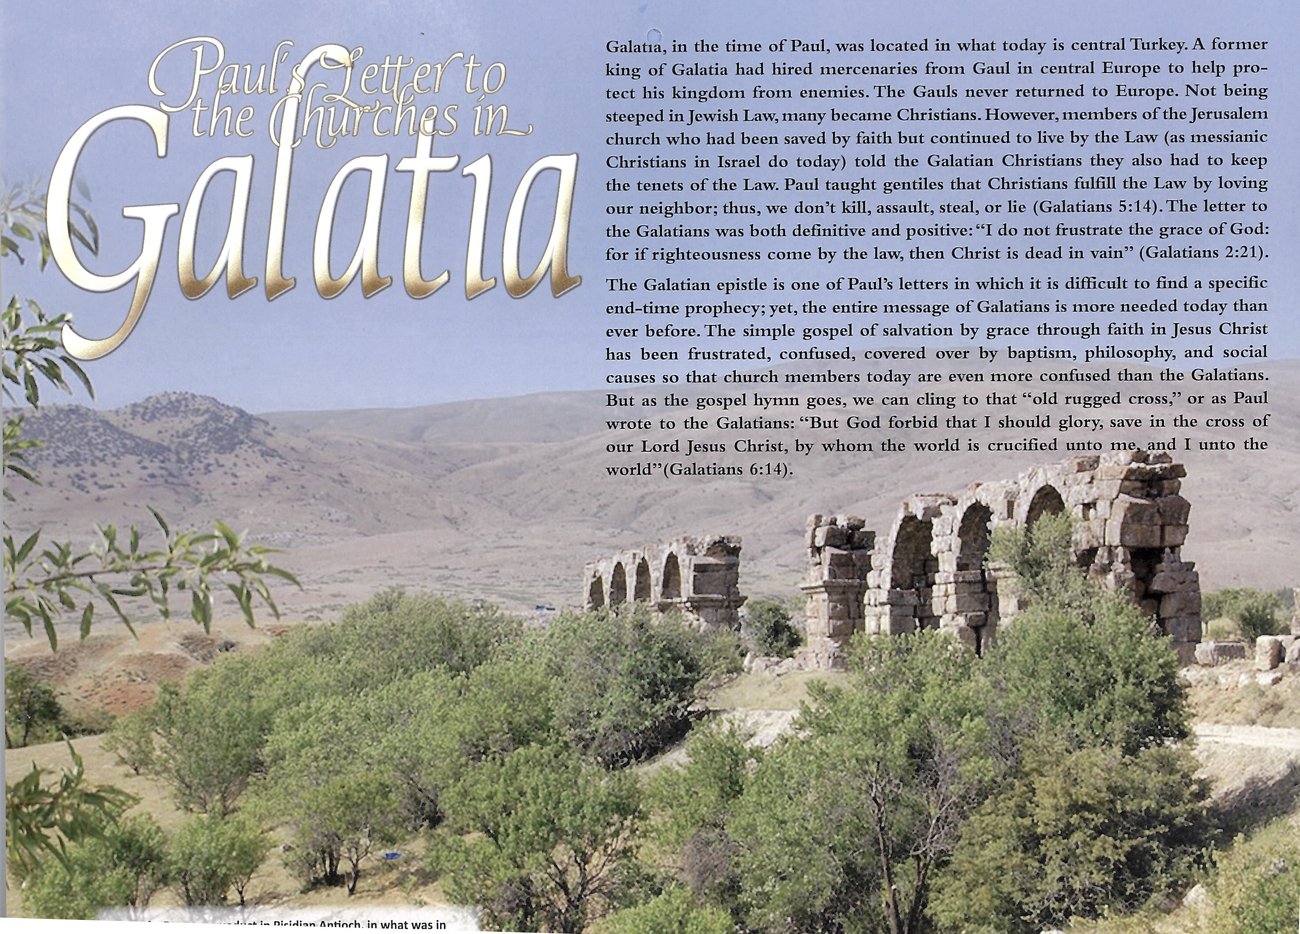 2012 Prophecy Calendar: April - Paul's Letter to the Churches in Galatia